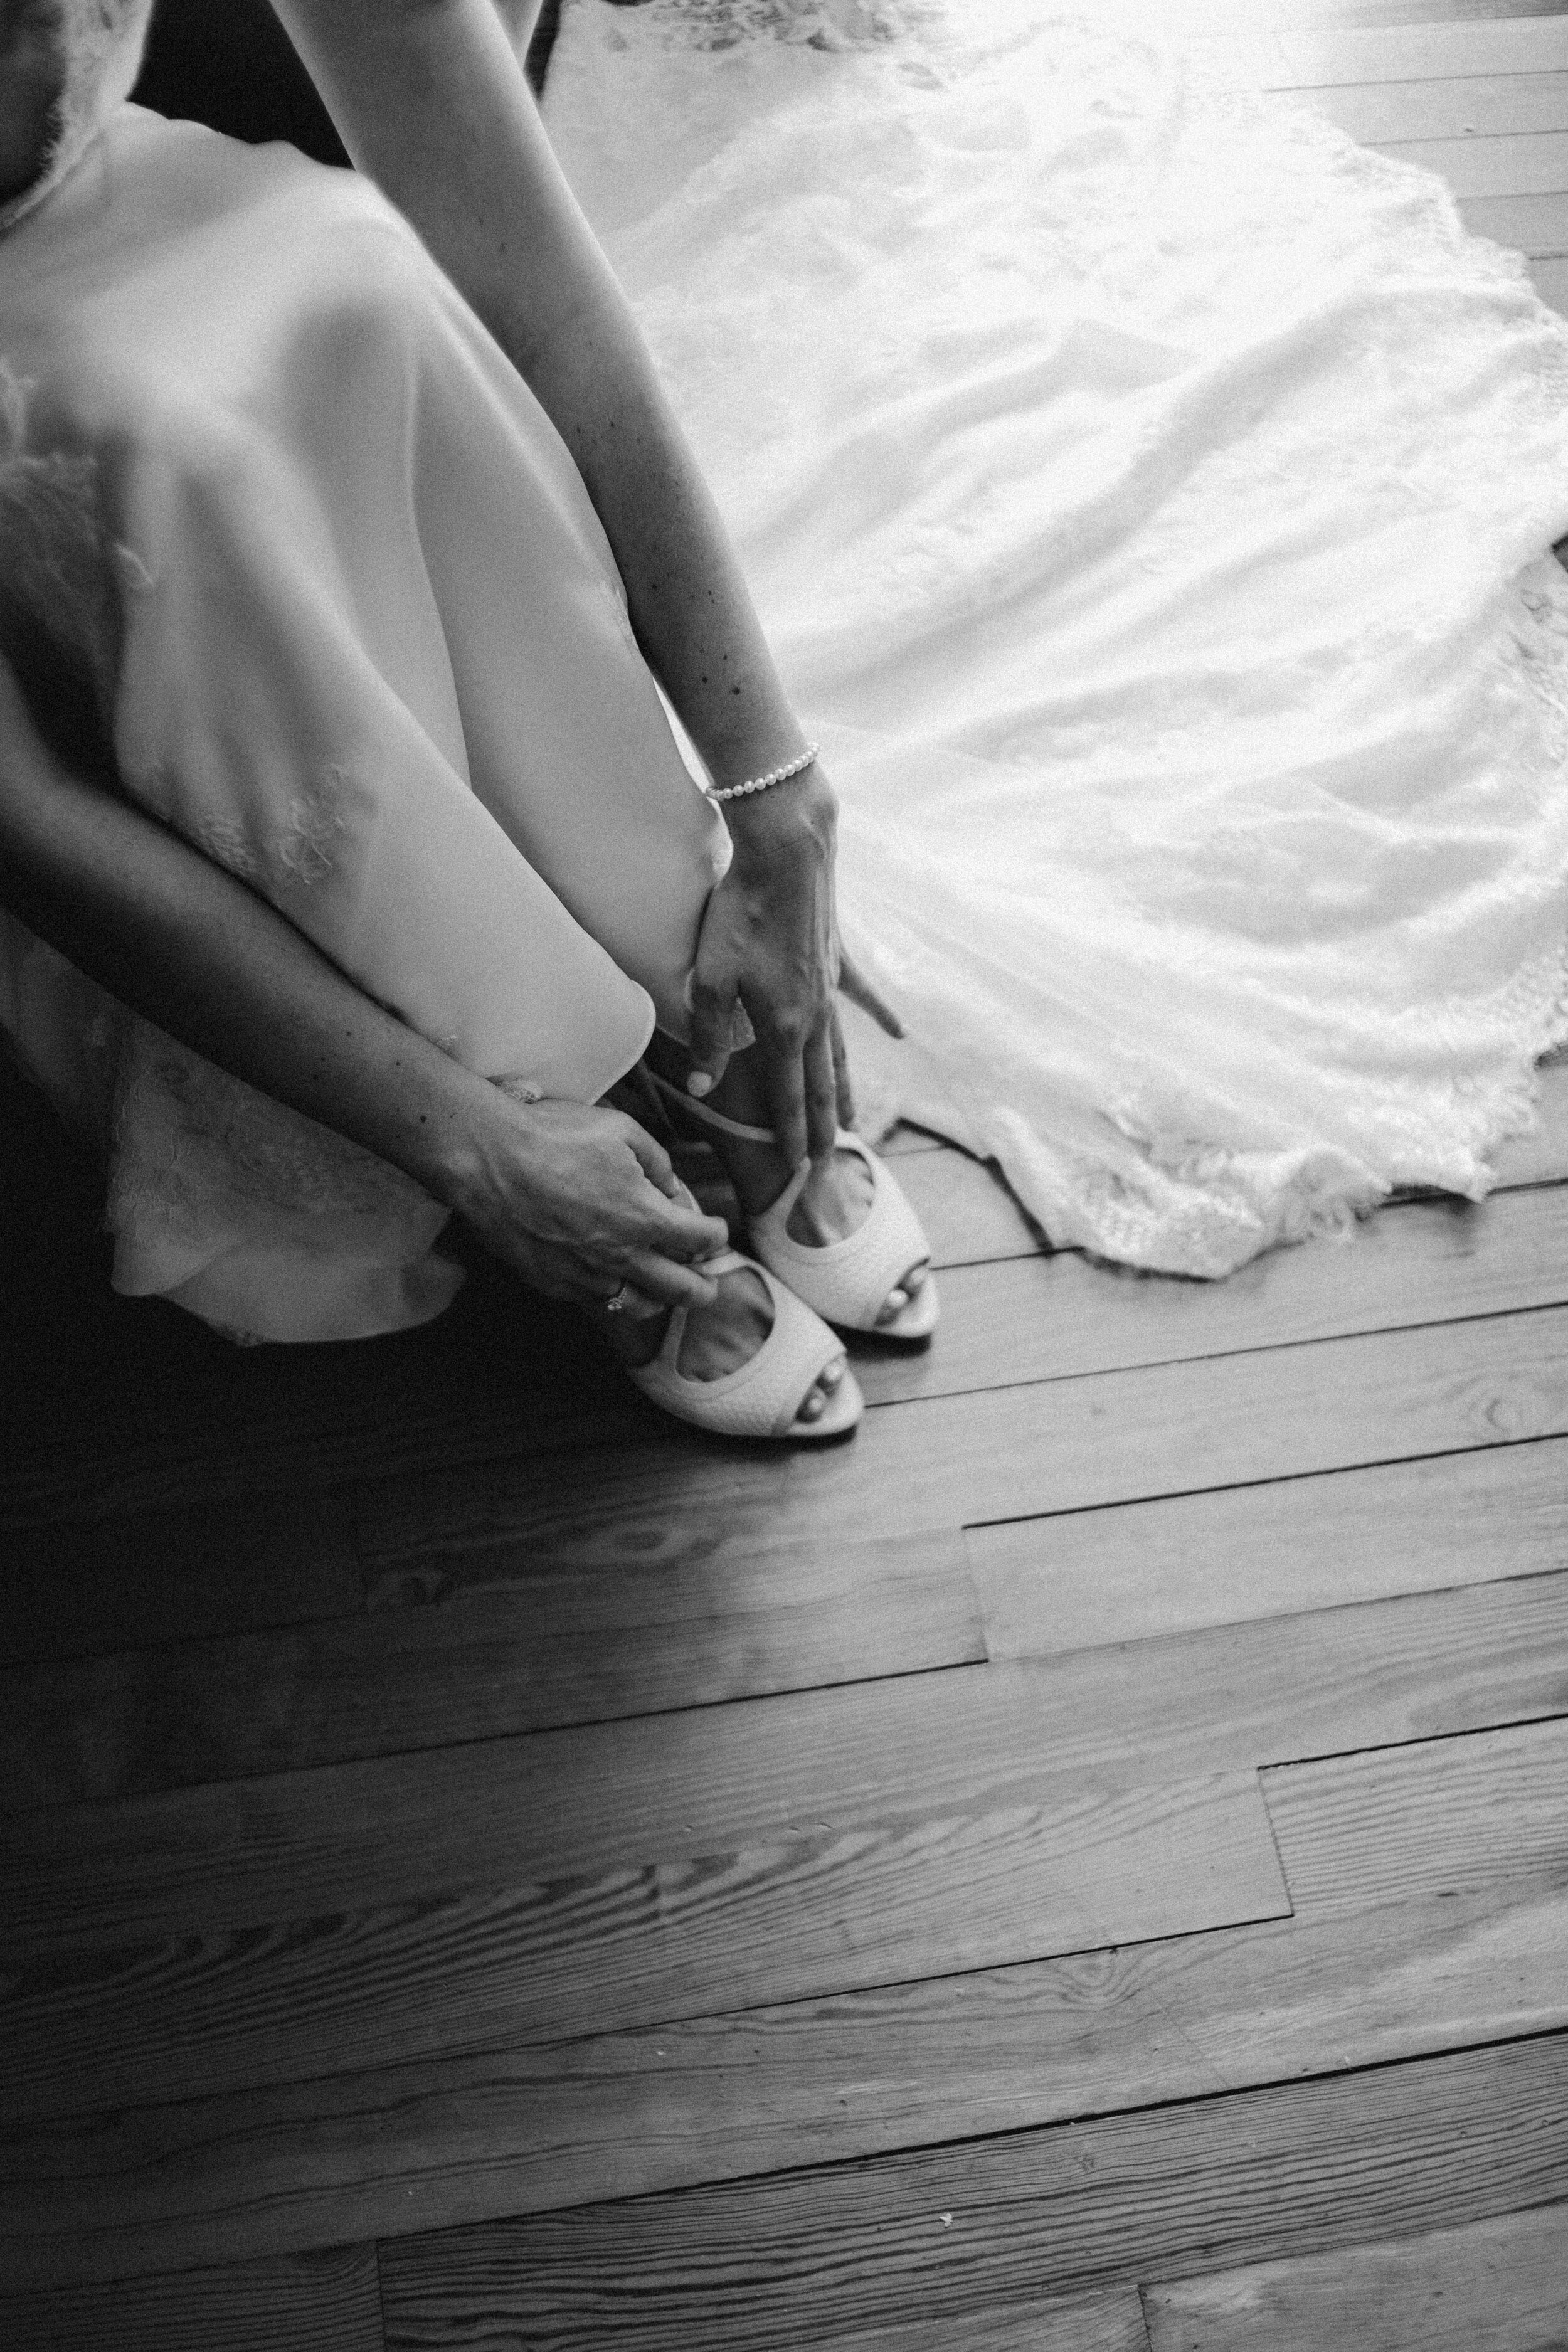 012 - Preparazione sposa - Miriam Callegari Fotografa.JPG